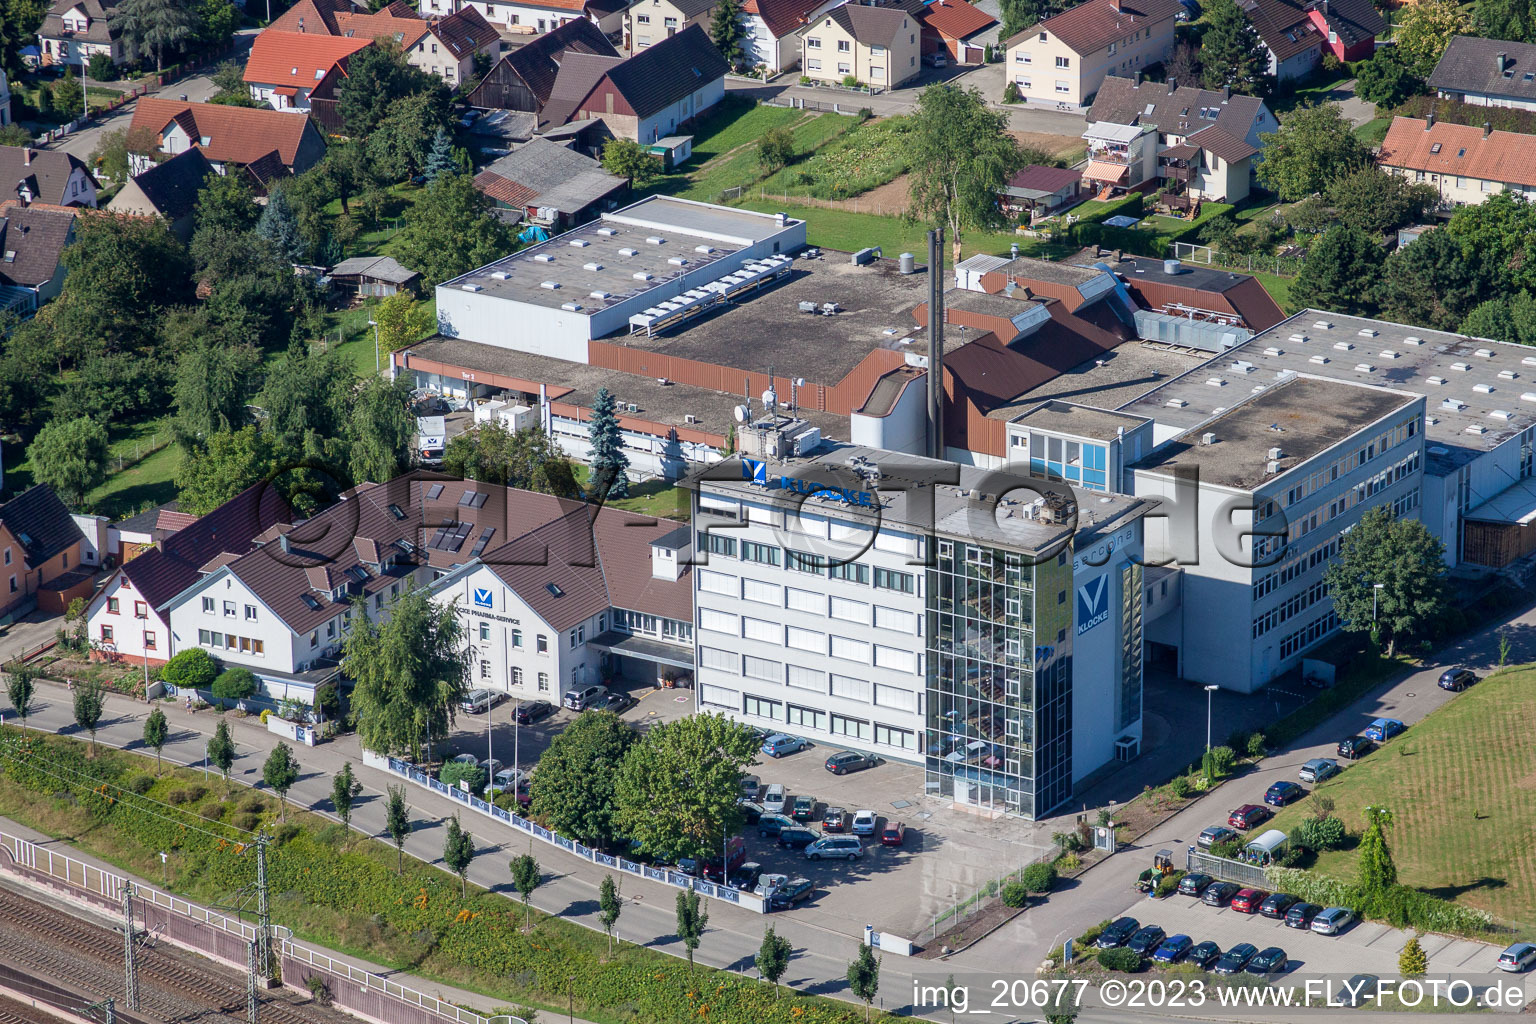 Oblique view of Klocke Pharma GmbH in the district Urloffen in Appenweier in the state Baden-Wuerttemberg, Germany